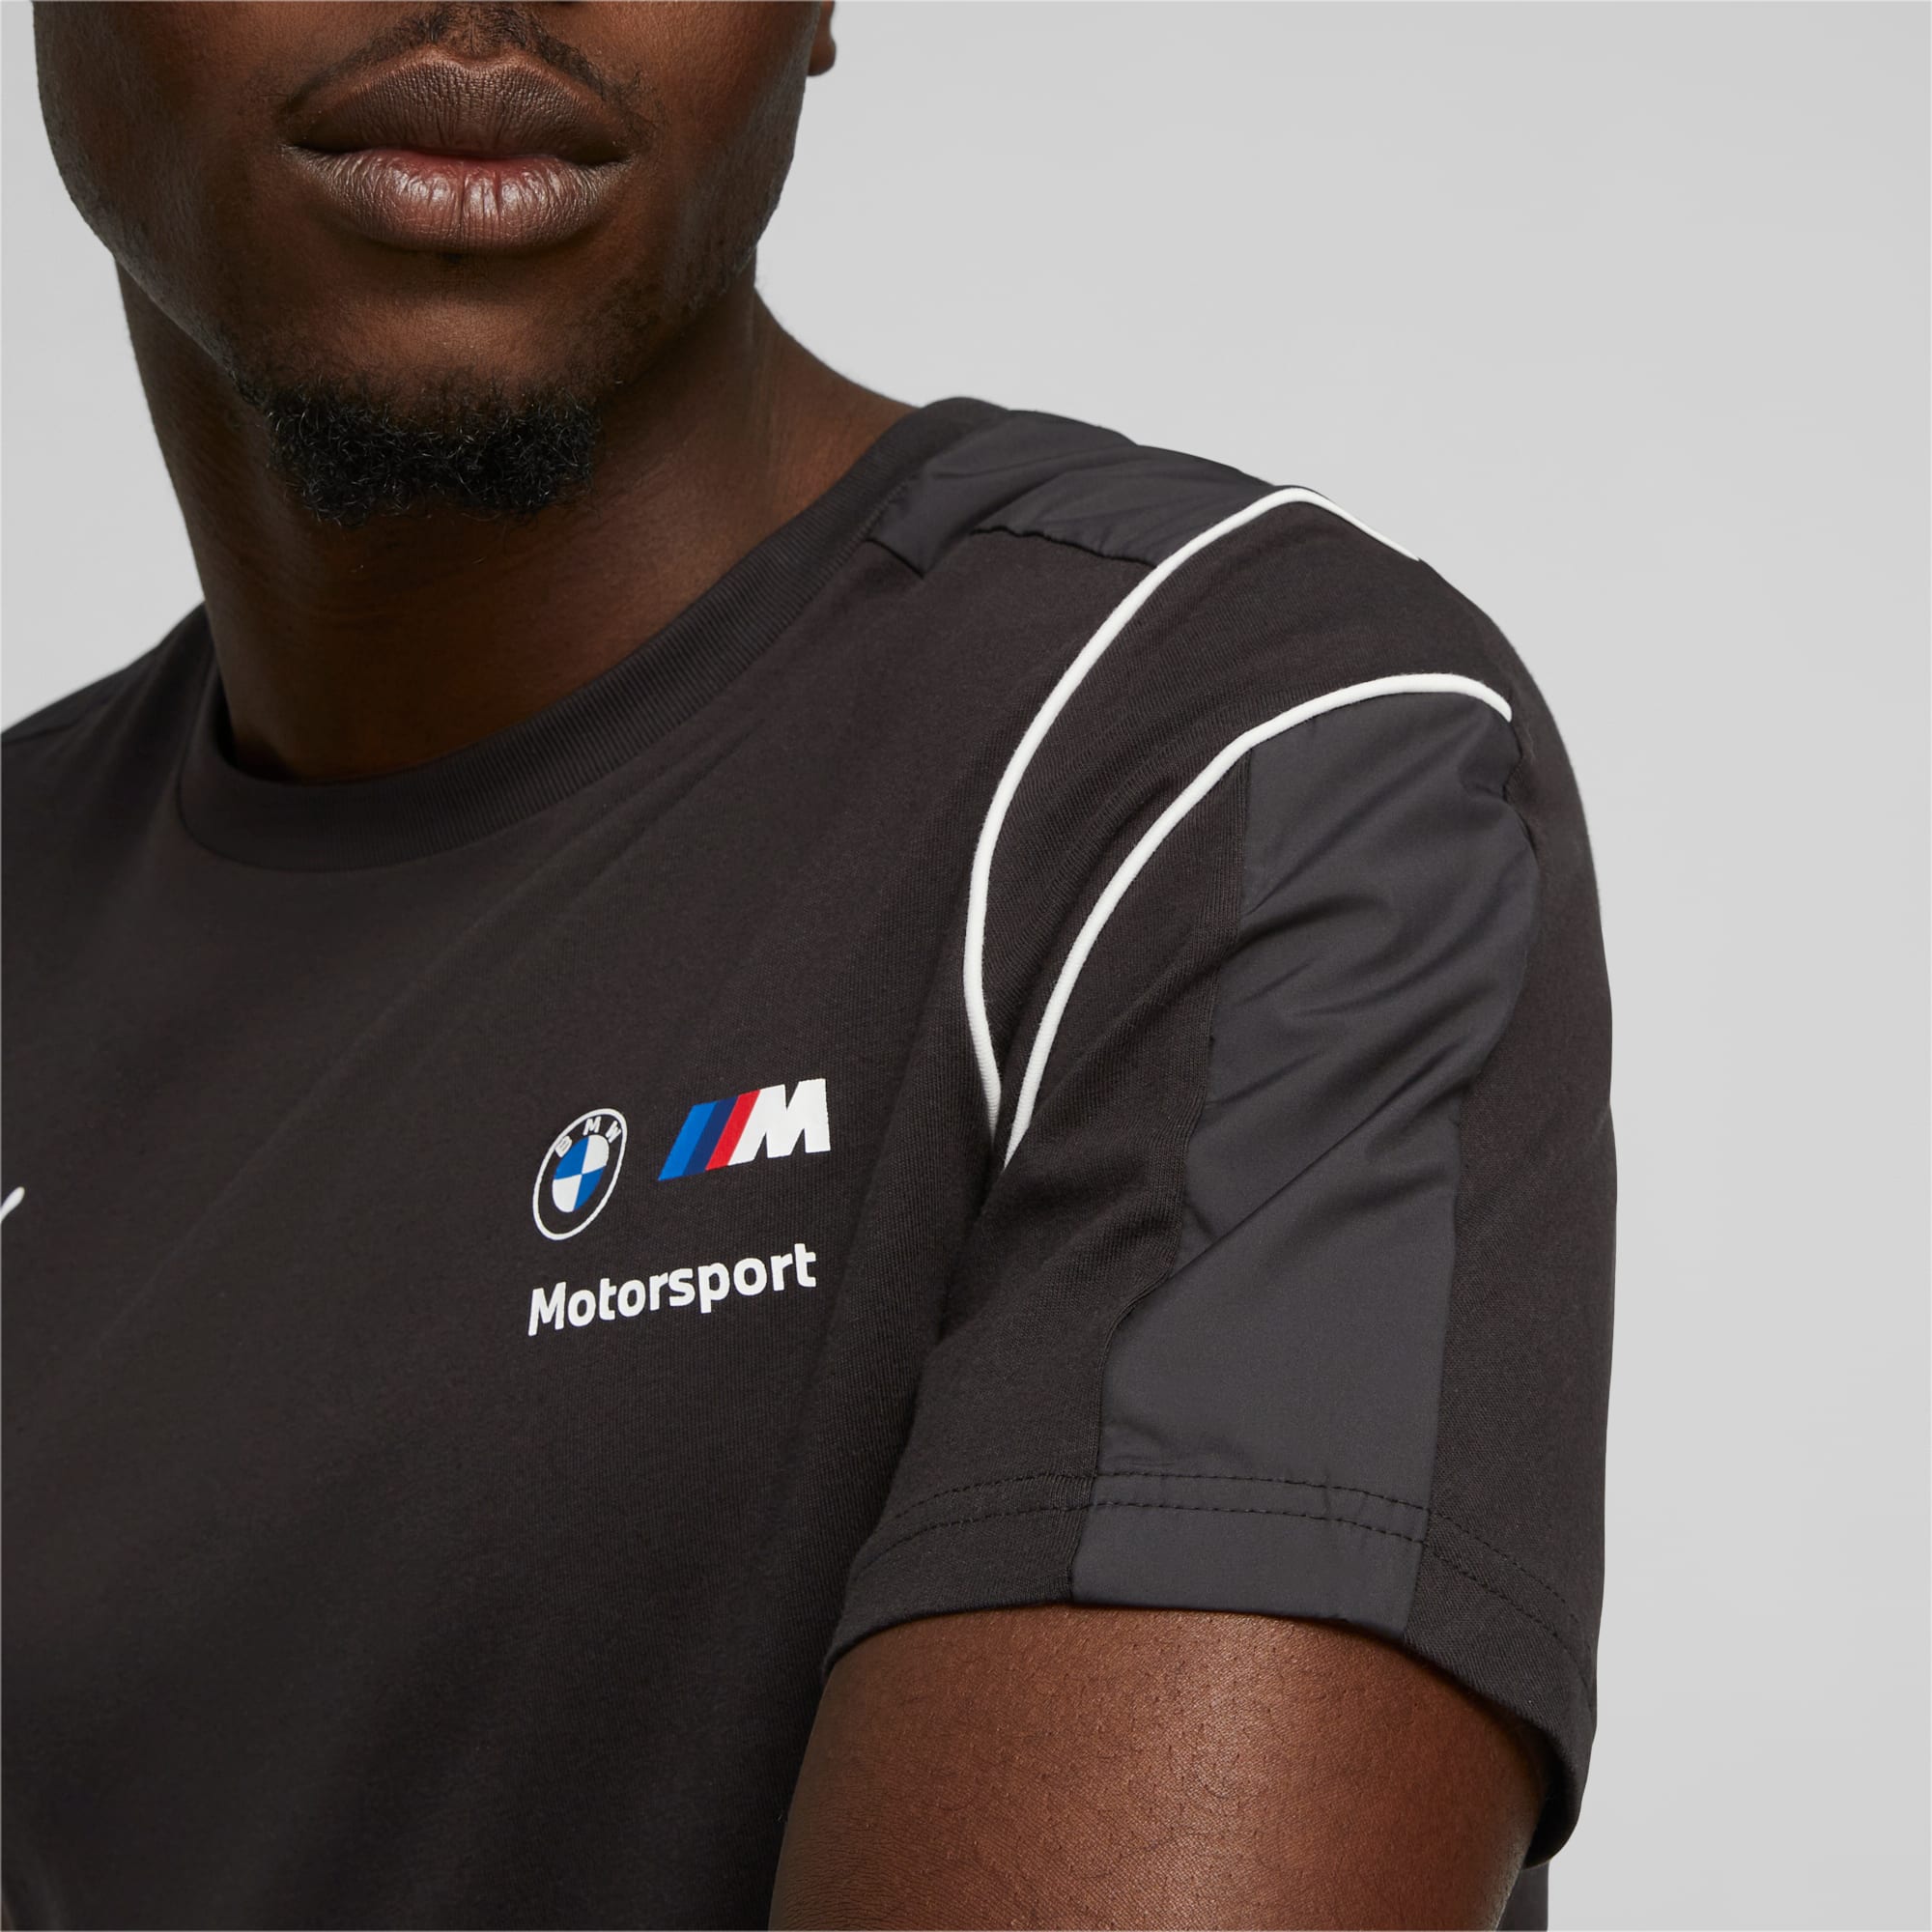 PUMA BMW M Motorsport Men's Mt7 T-Shirt, Black, Size S, Clothing